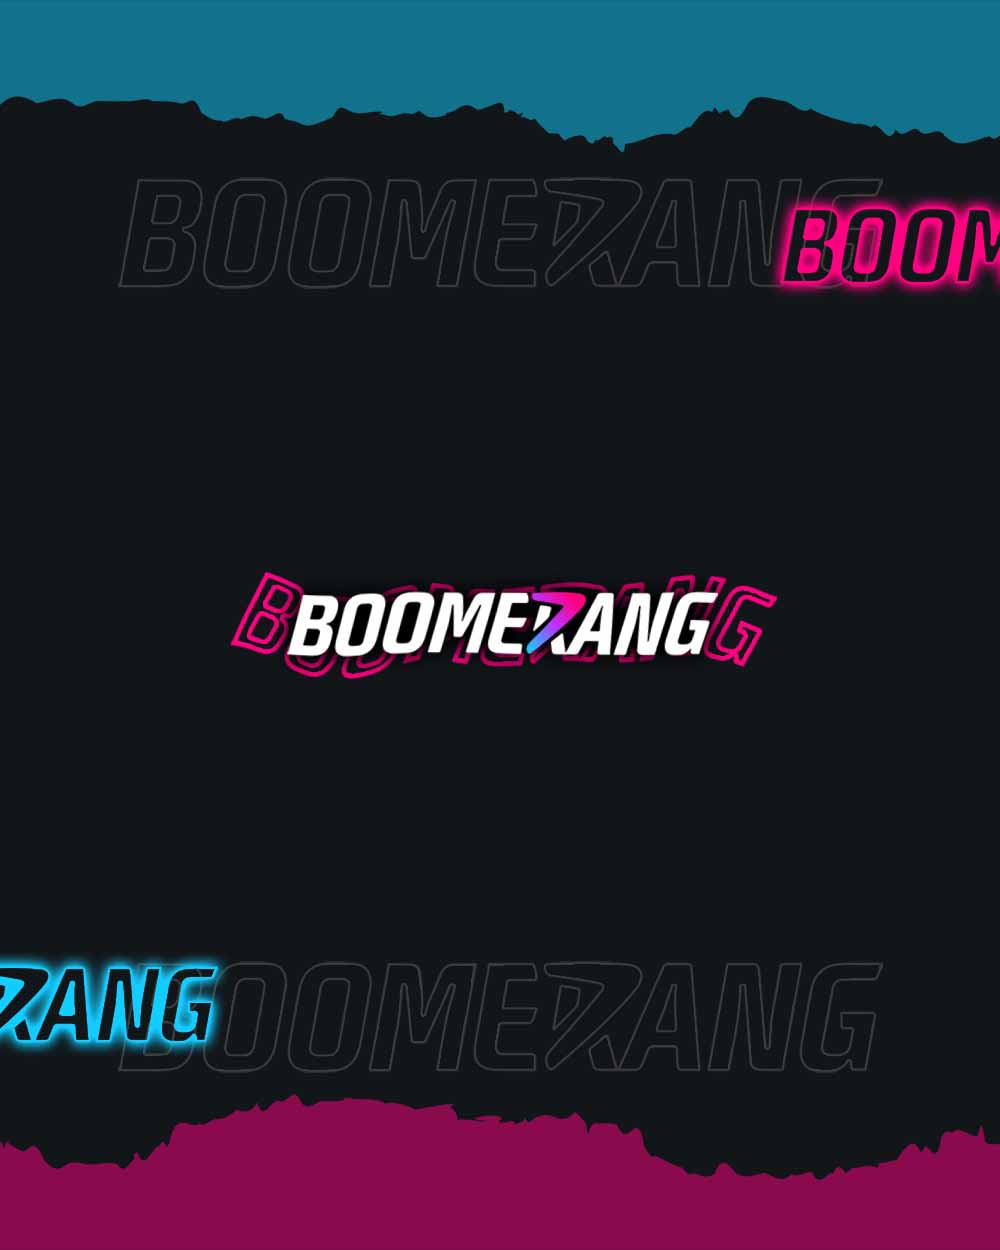 Boomerang bonus